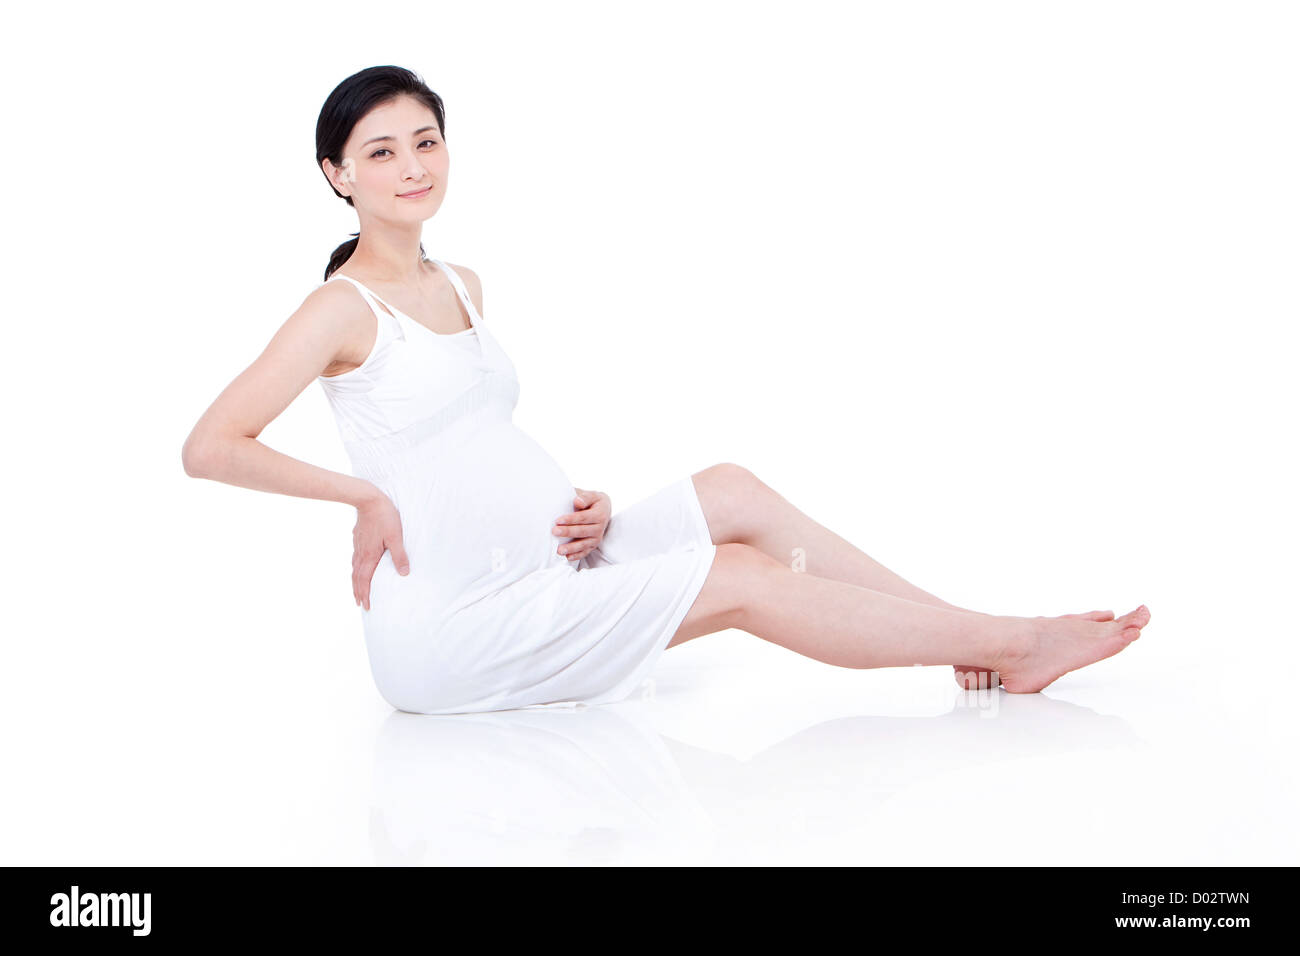 Cheerful pregnant woman sitting on floor Stock Photo